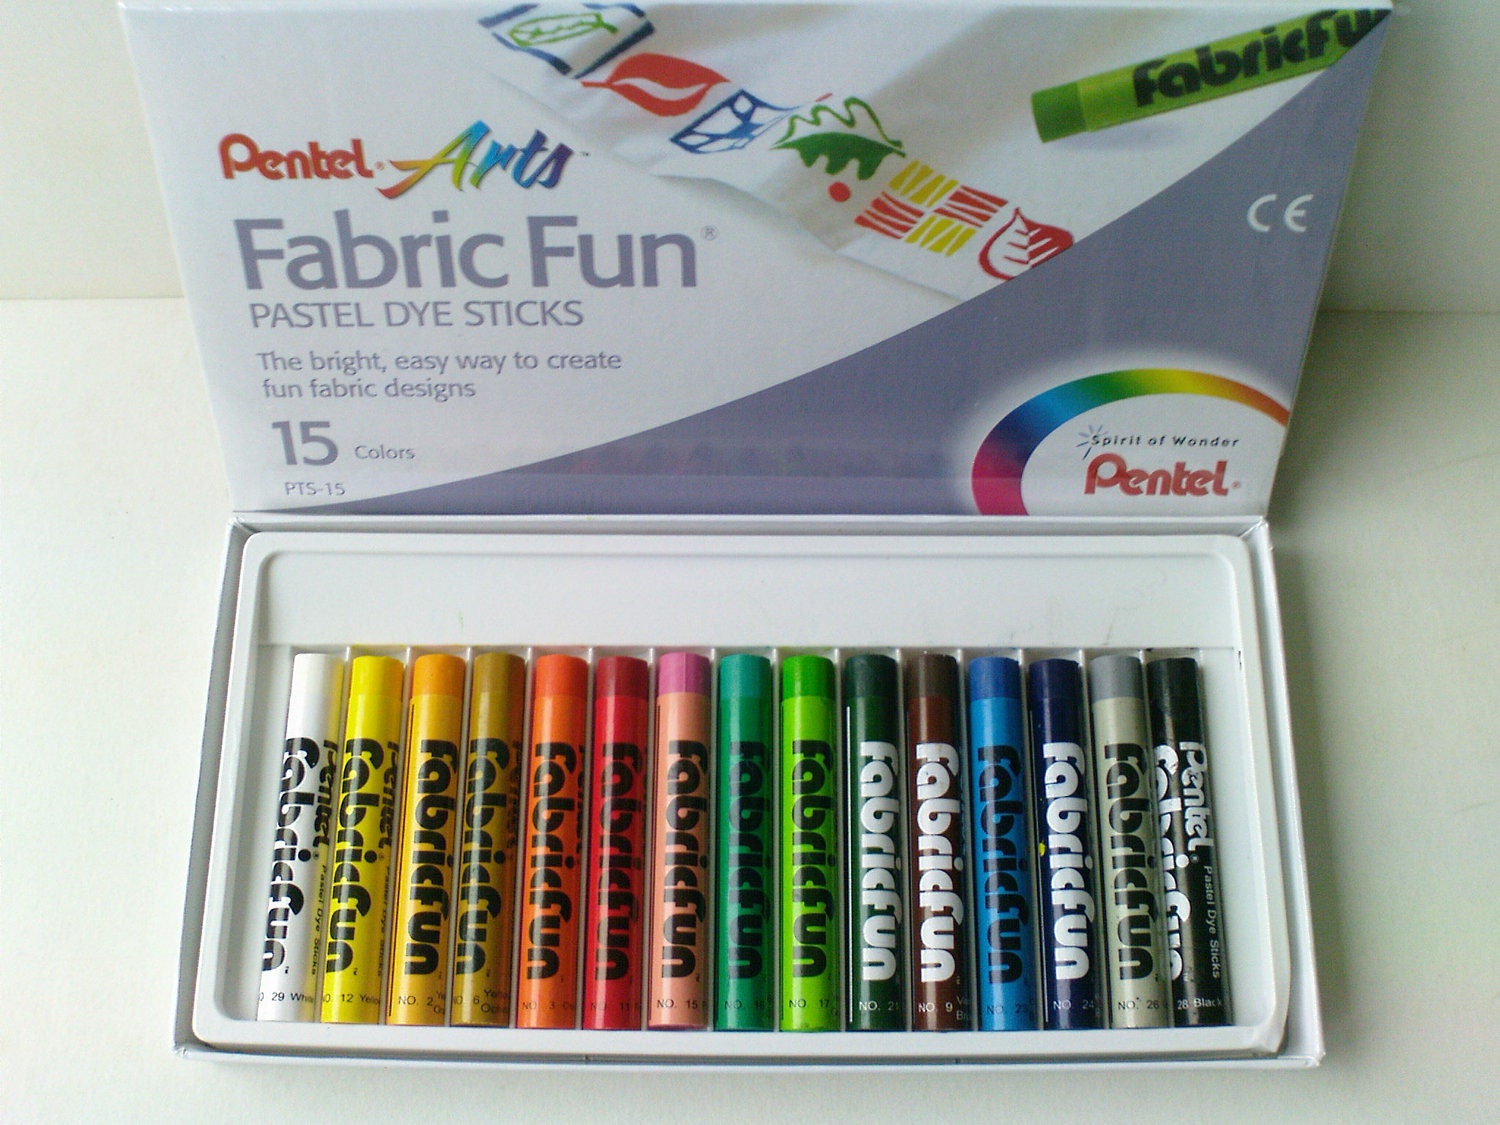 Pentel Arts Fabric Fun Pastel Dye Sticks 15 Colors the